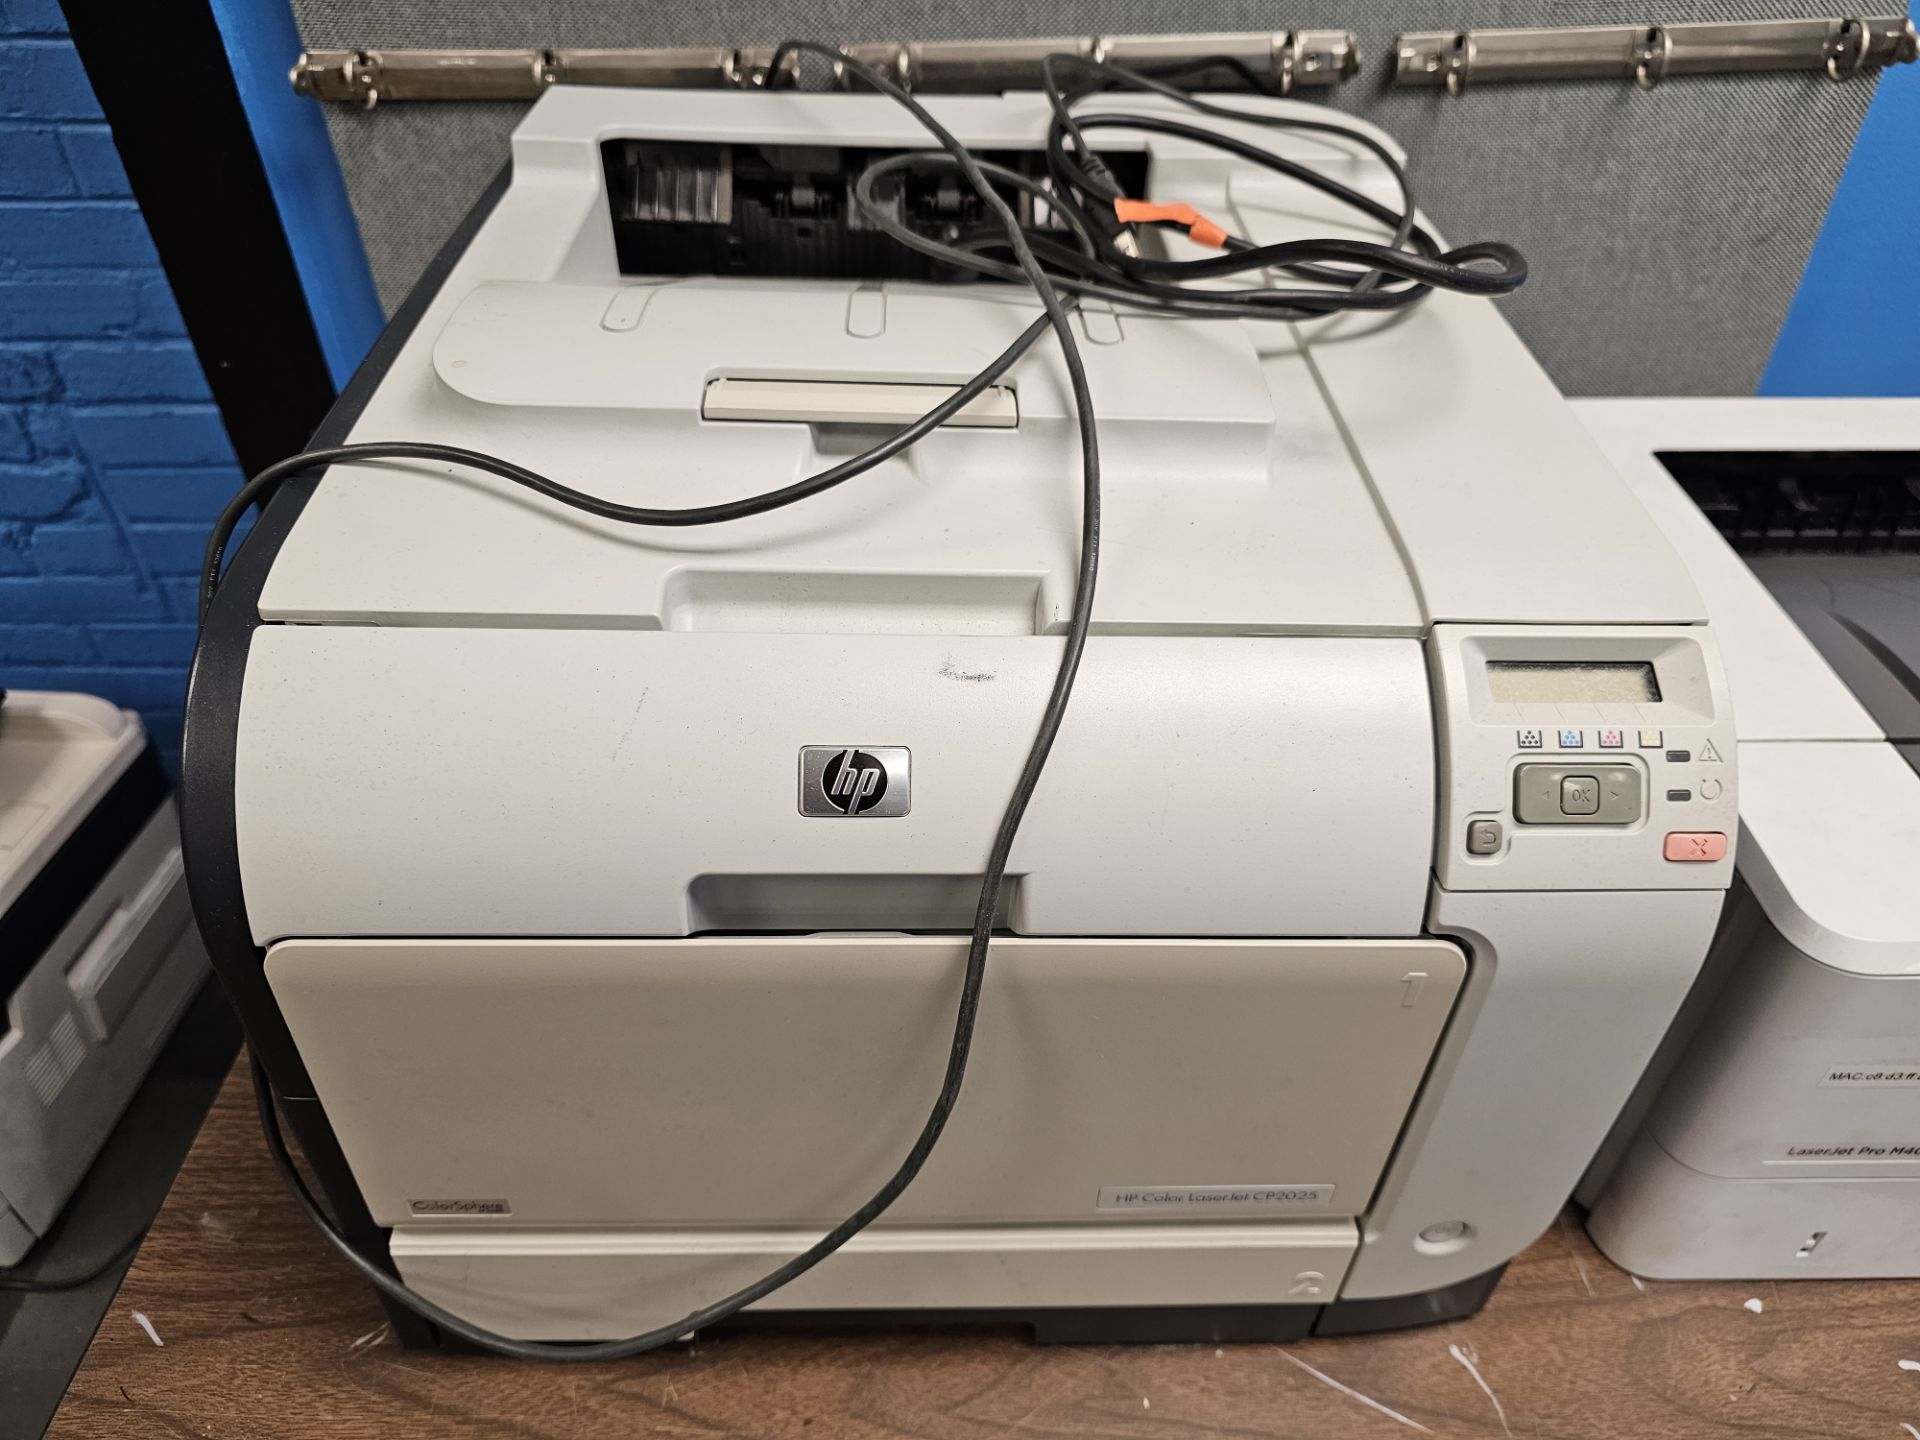 HP Laserjet Printers And Computer Speakers - Image 2 of 6